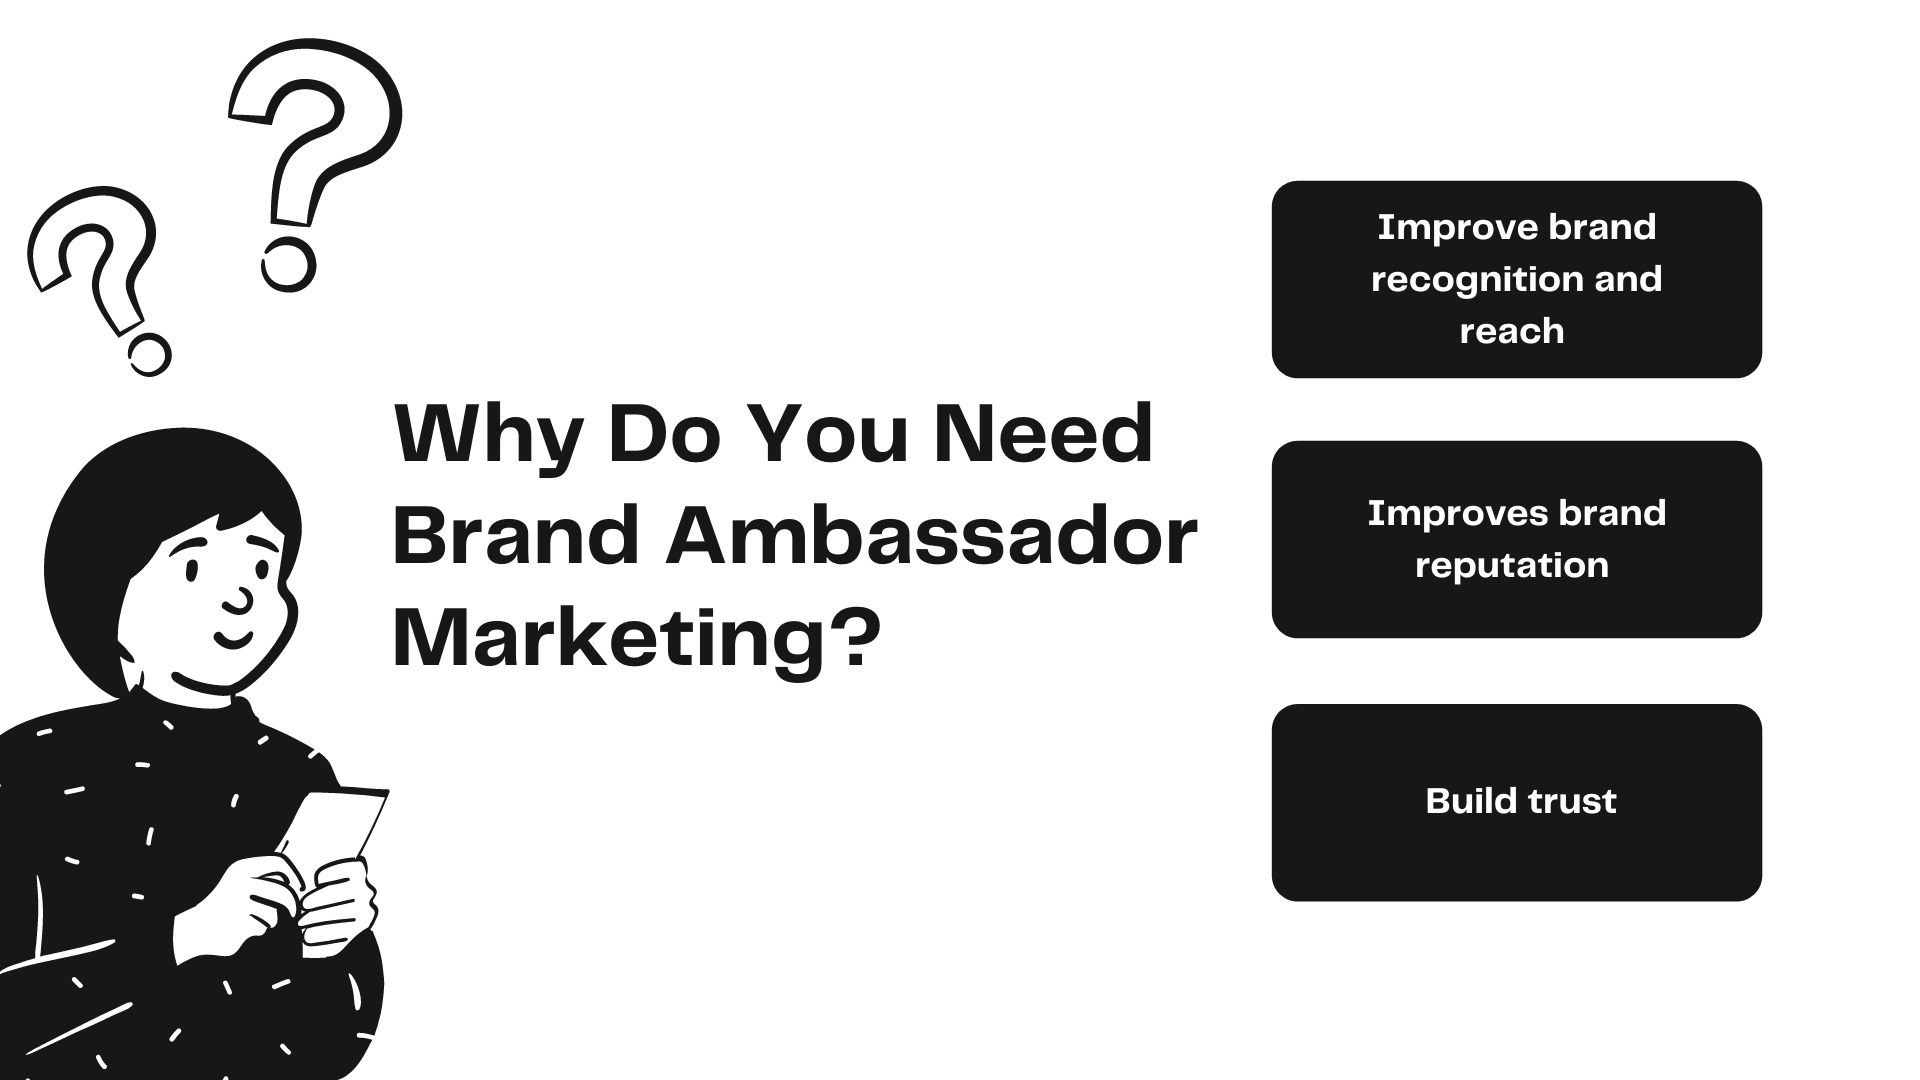 https://b2568532.smushcdn.com/2568532/wp-content/uploads/2021/11/Why-do-you-need-brand-ambassador-marketing.png?lossy=0&strip=1&webp=1